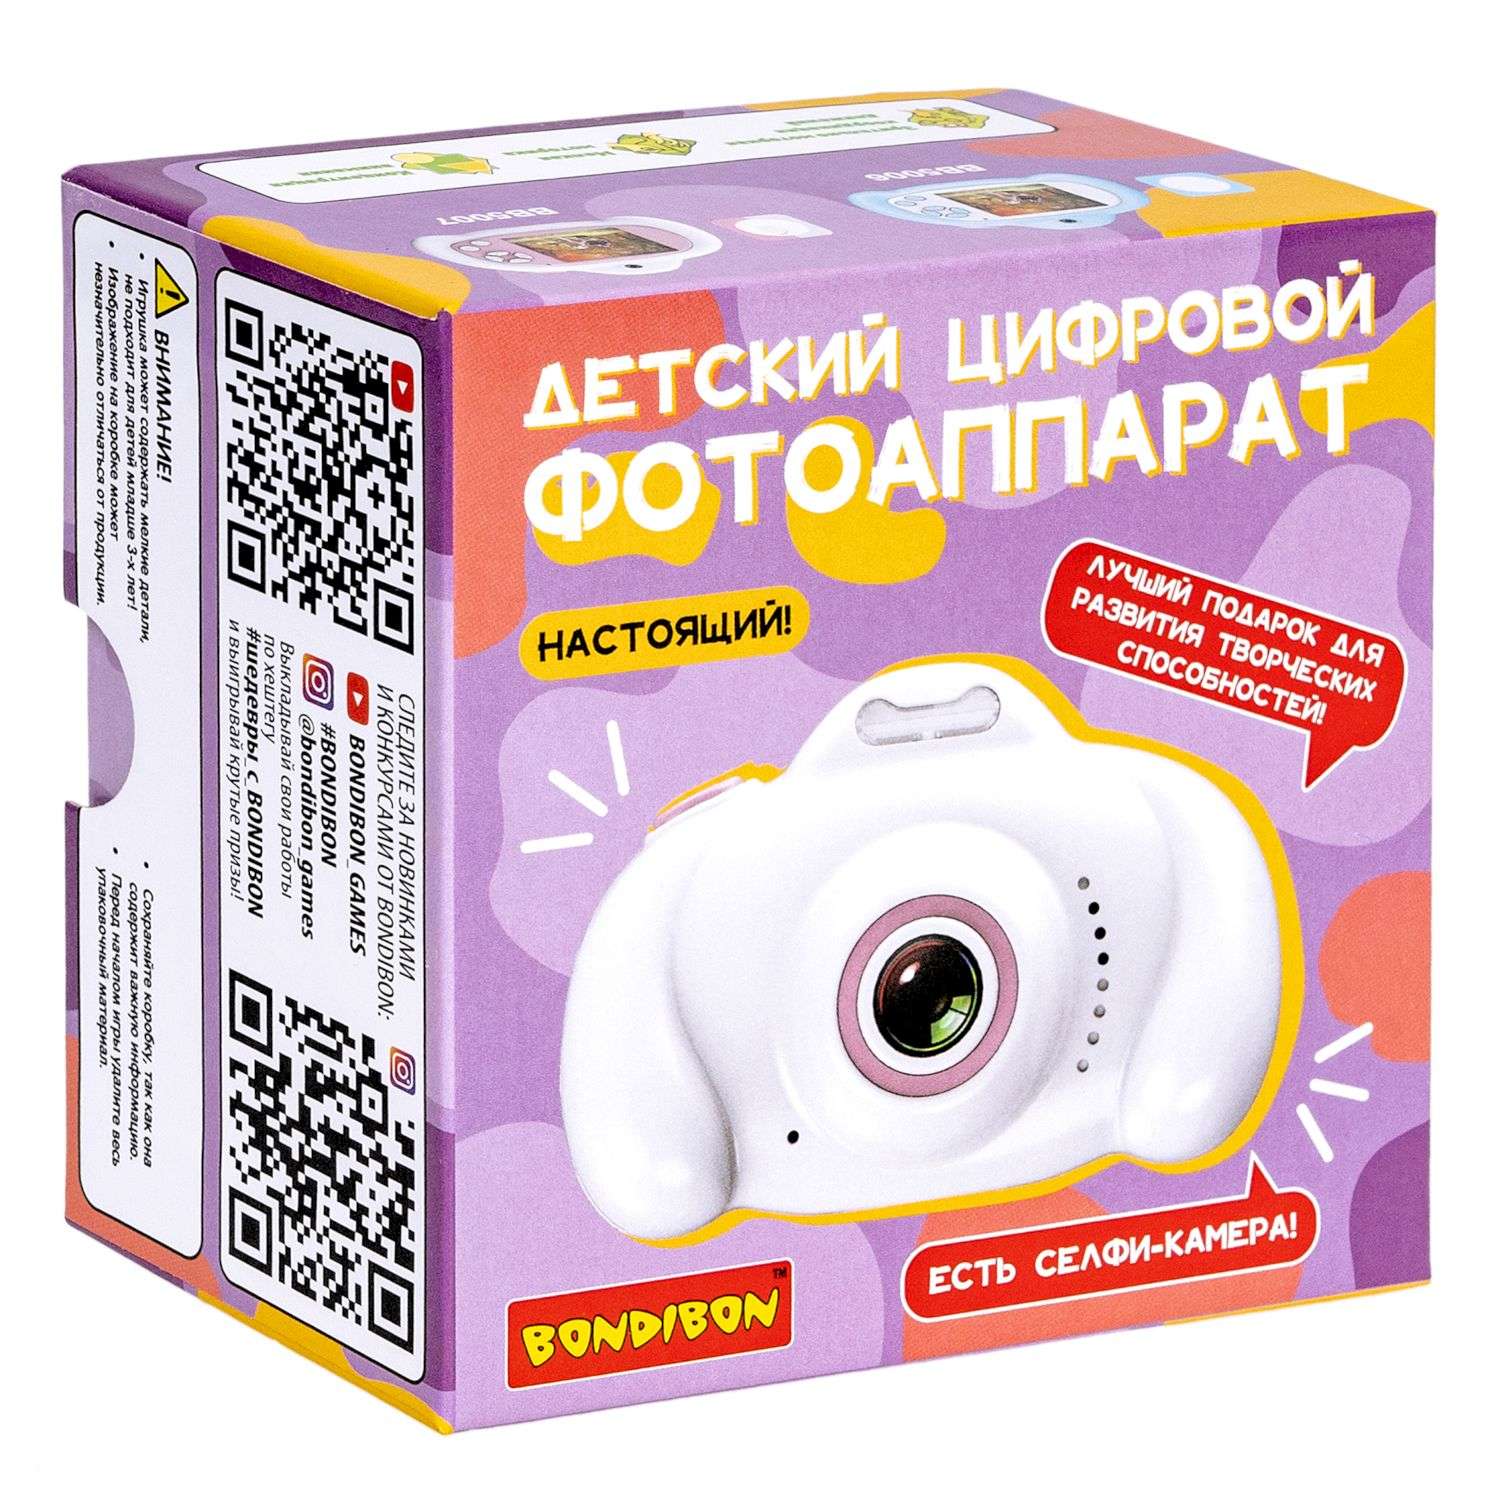 Цифровой фотоаппарат BONDIBON с селфи камерой и видео съемкой белого цвета - фото 3